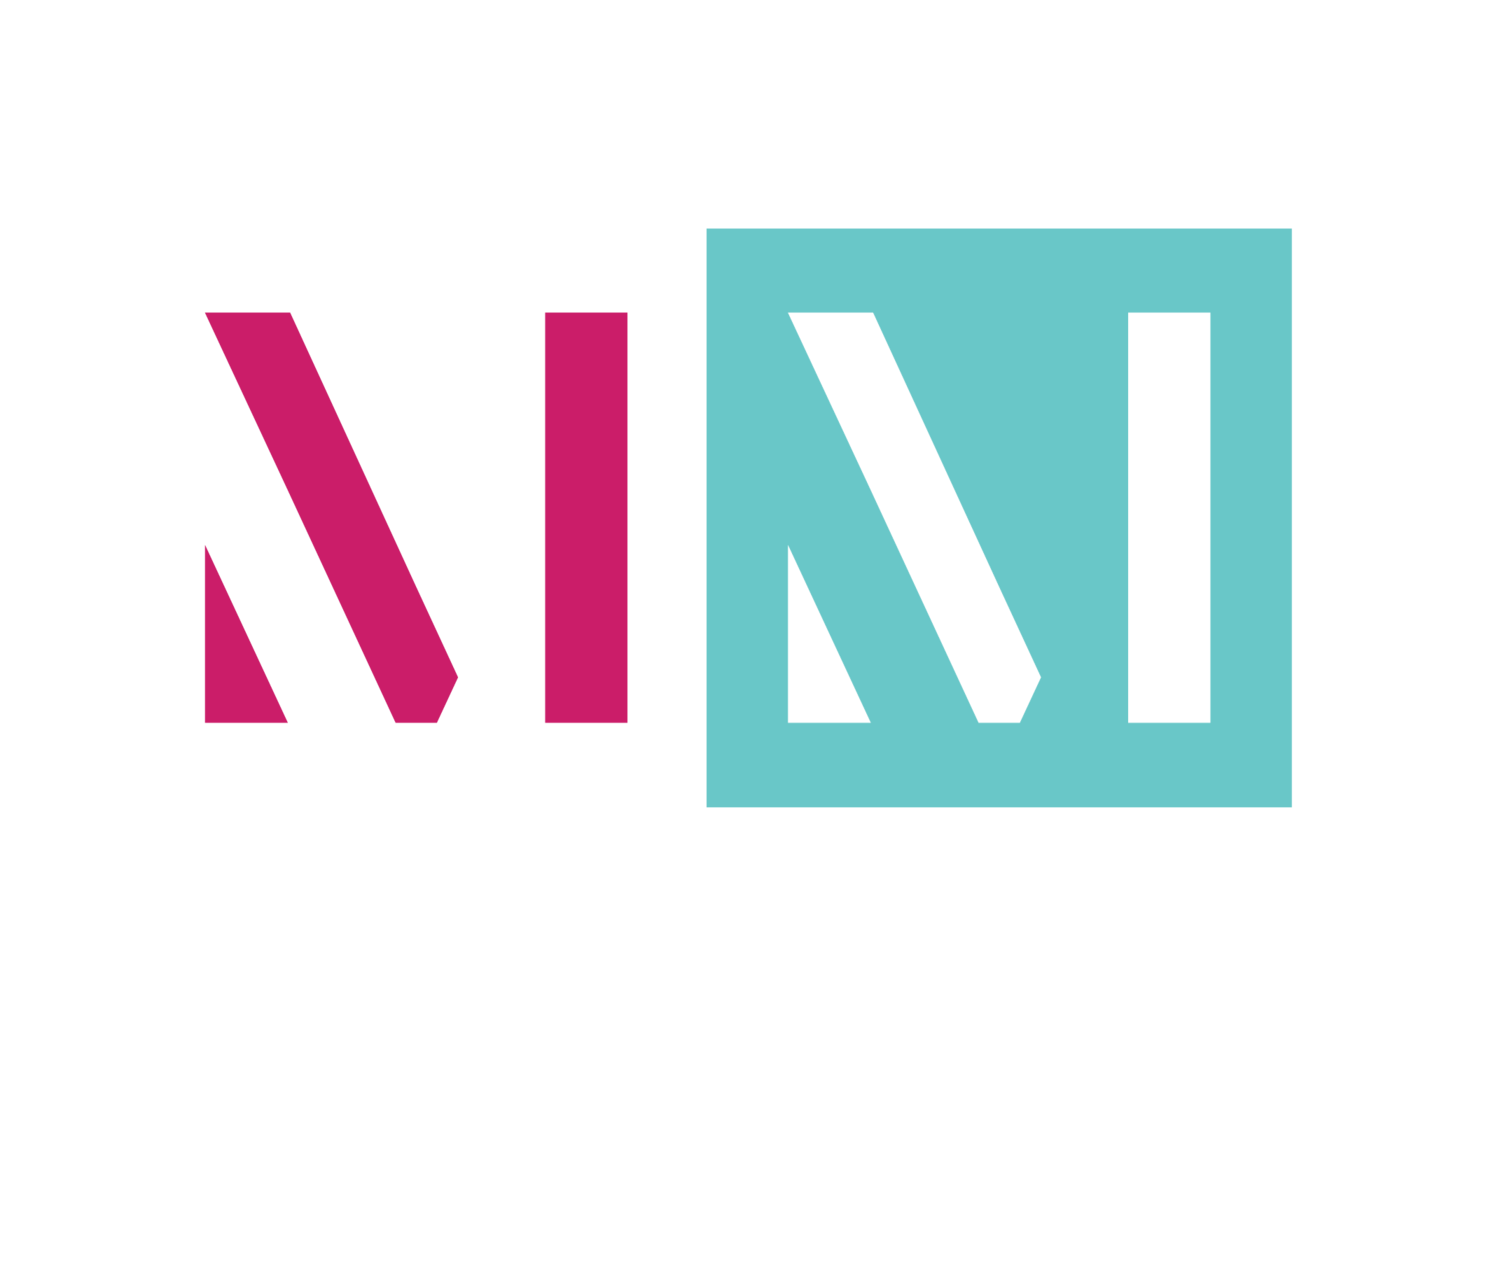 Miranda Murphy Inc. Chartered Professional Accountant